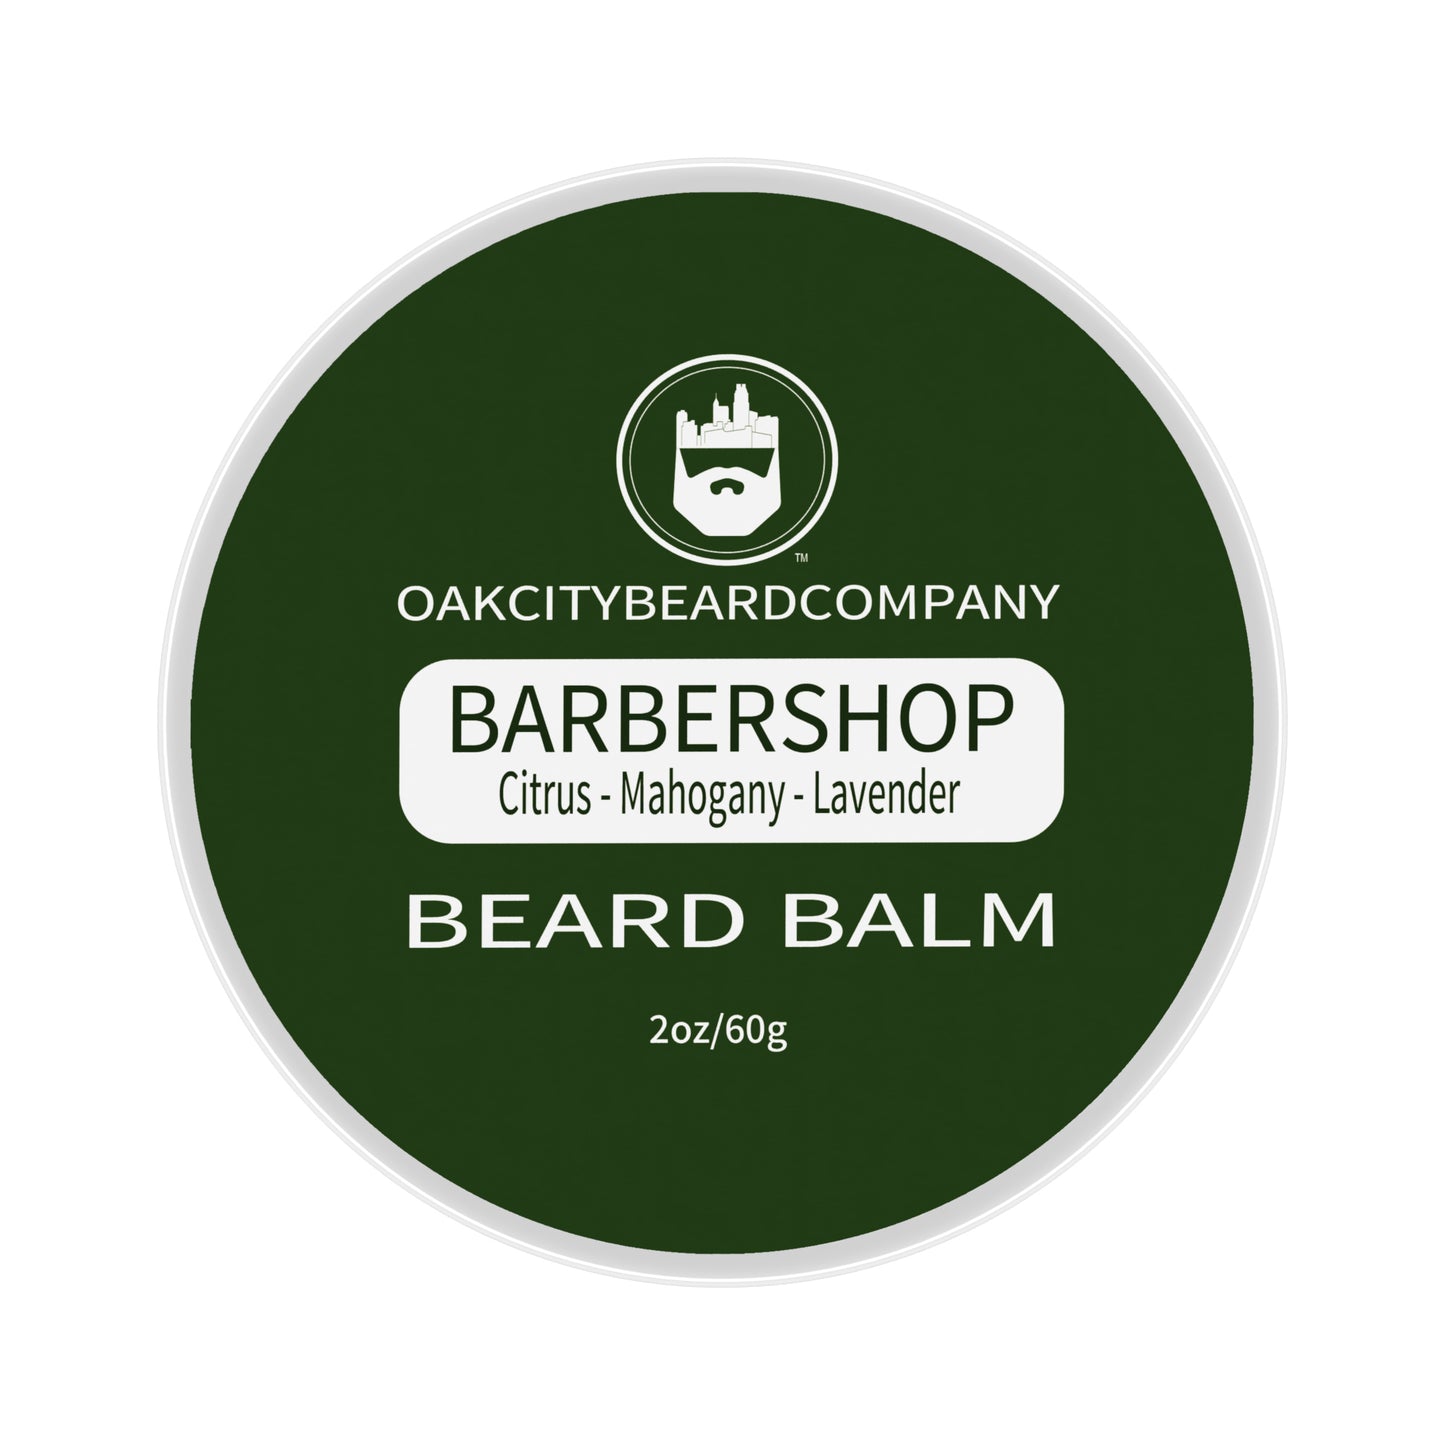 BarberShop (Beard Balm) by Oak City Beard Company